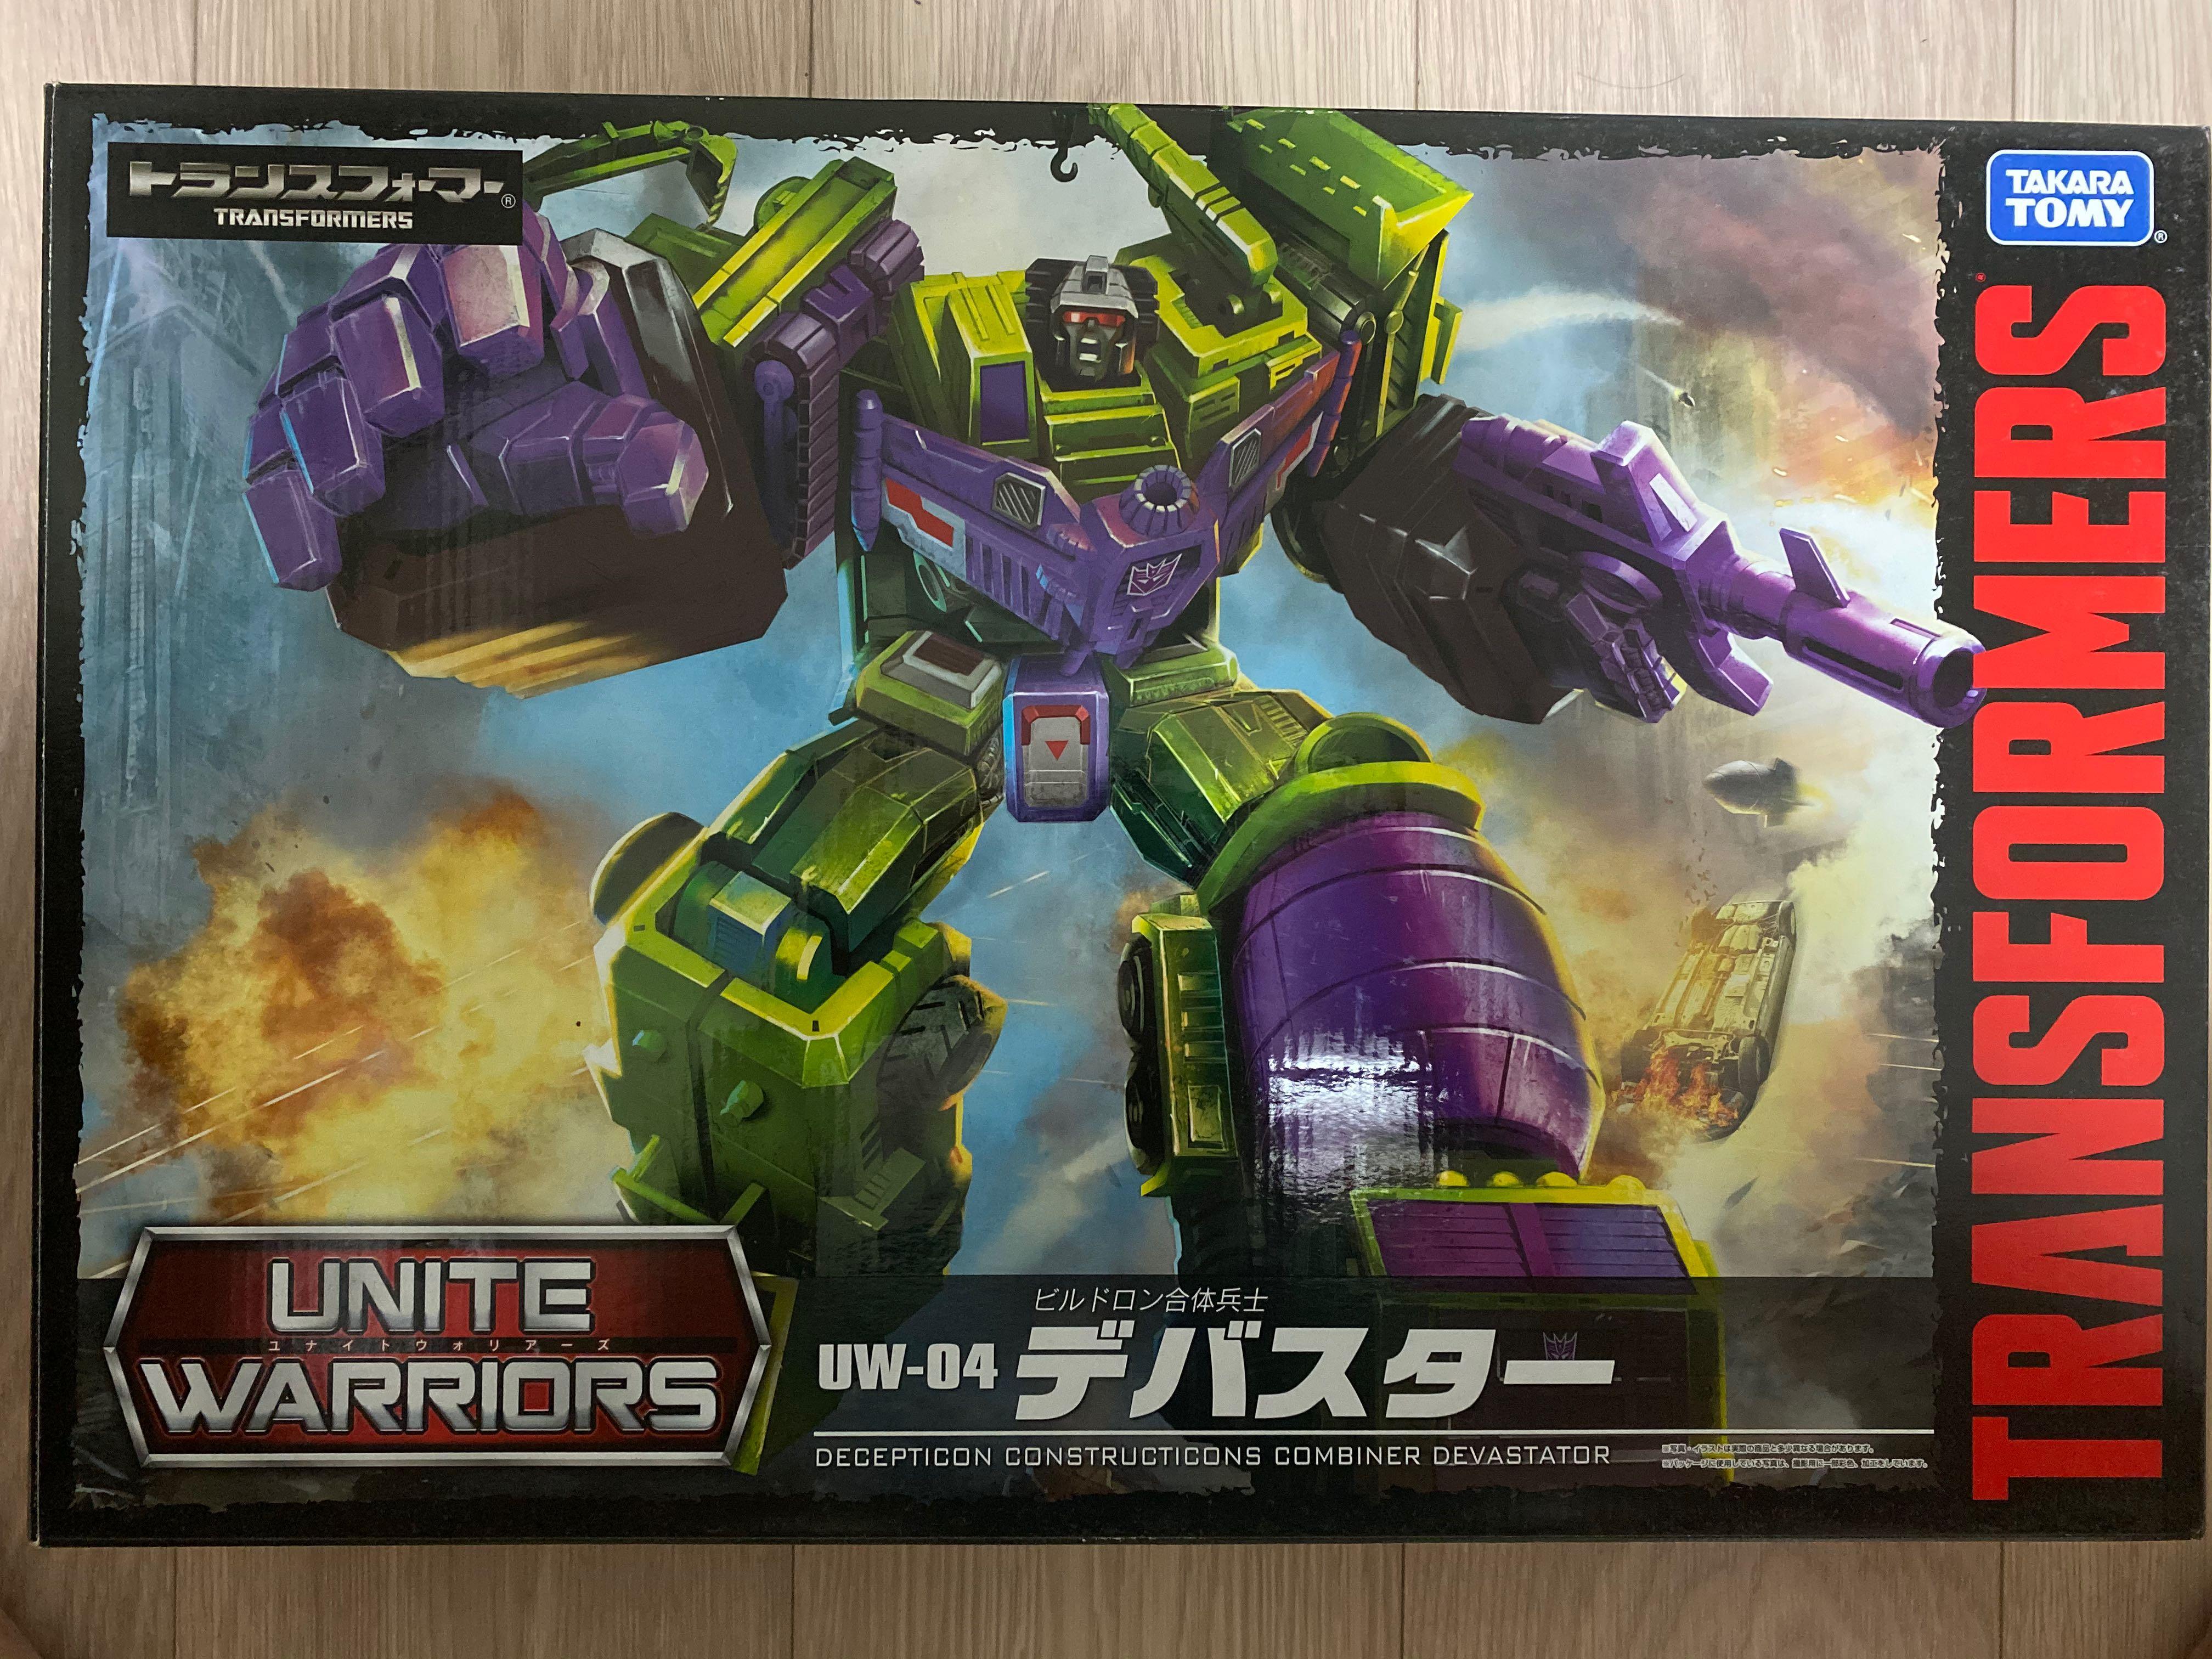 Transformers Unite Warriors UW-04 Devastator Constructicons COIN ONLY 